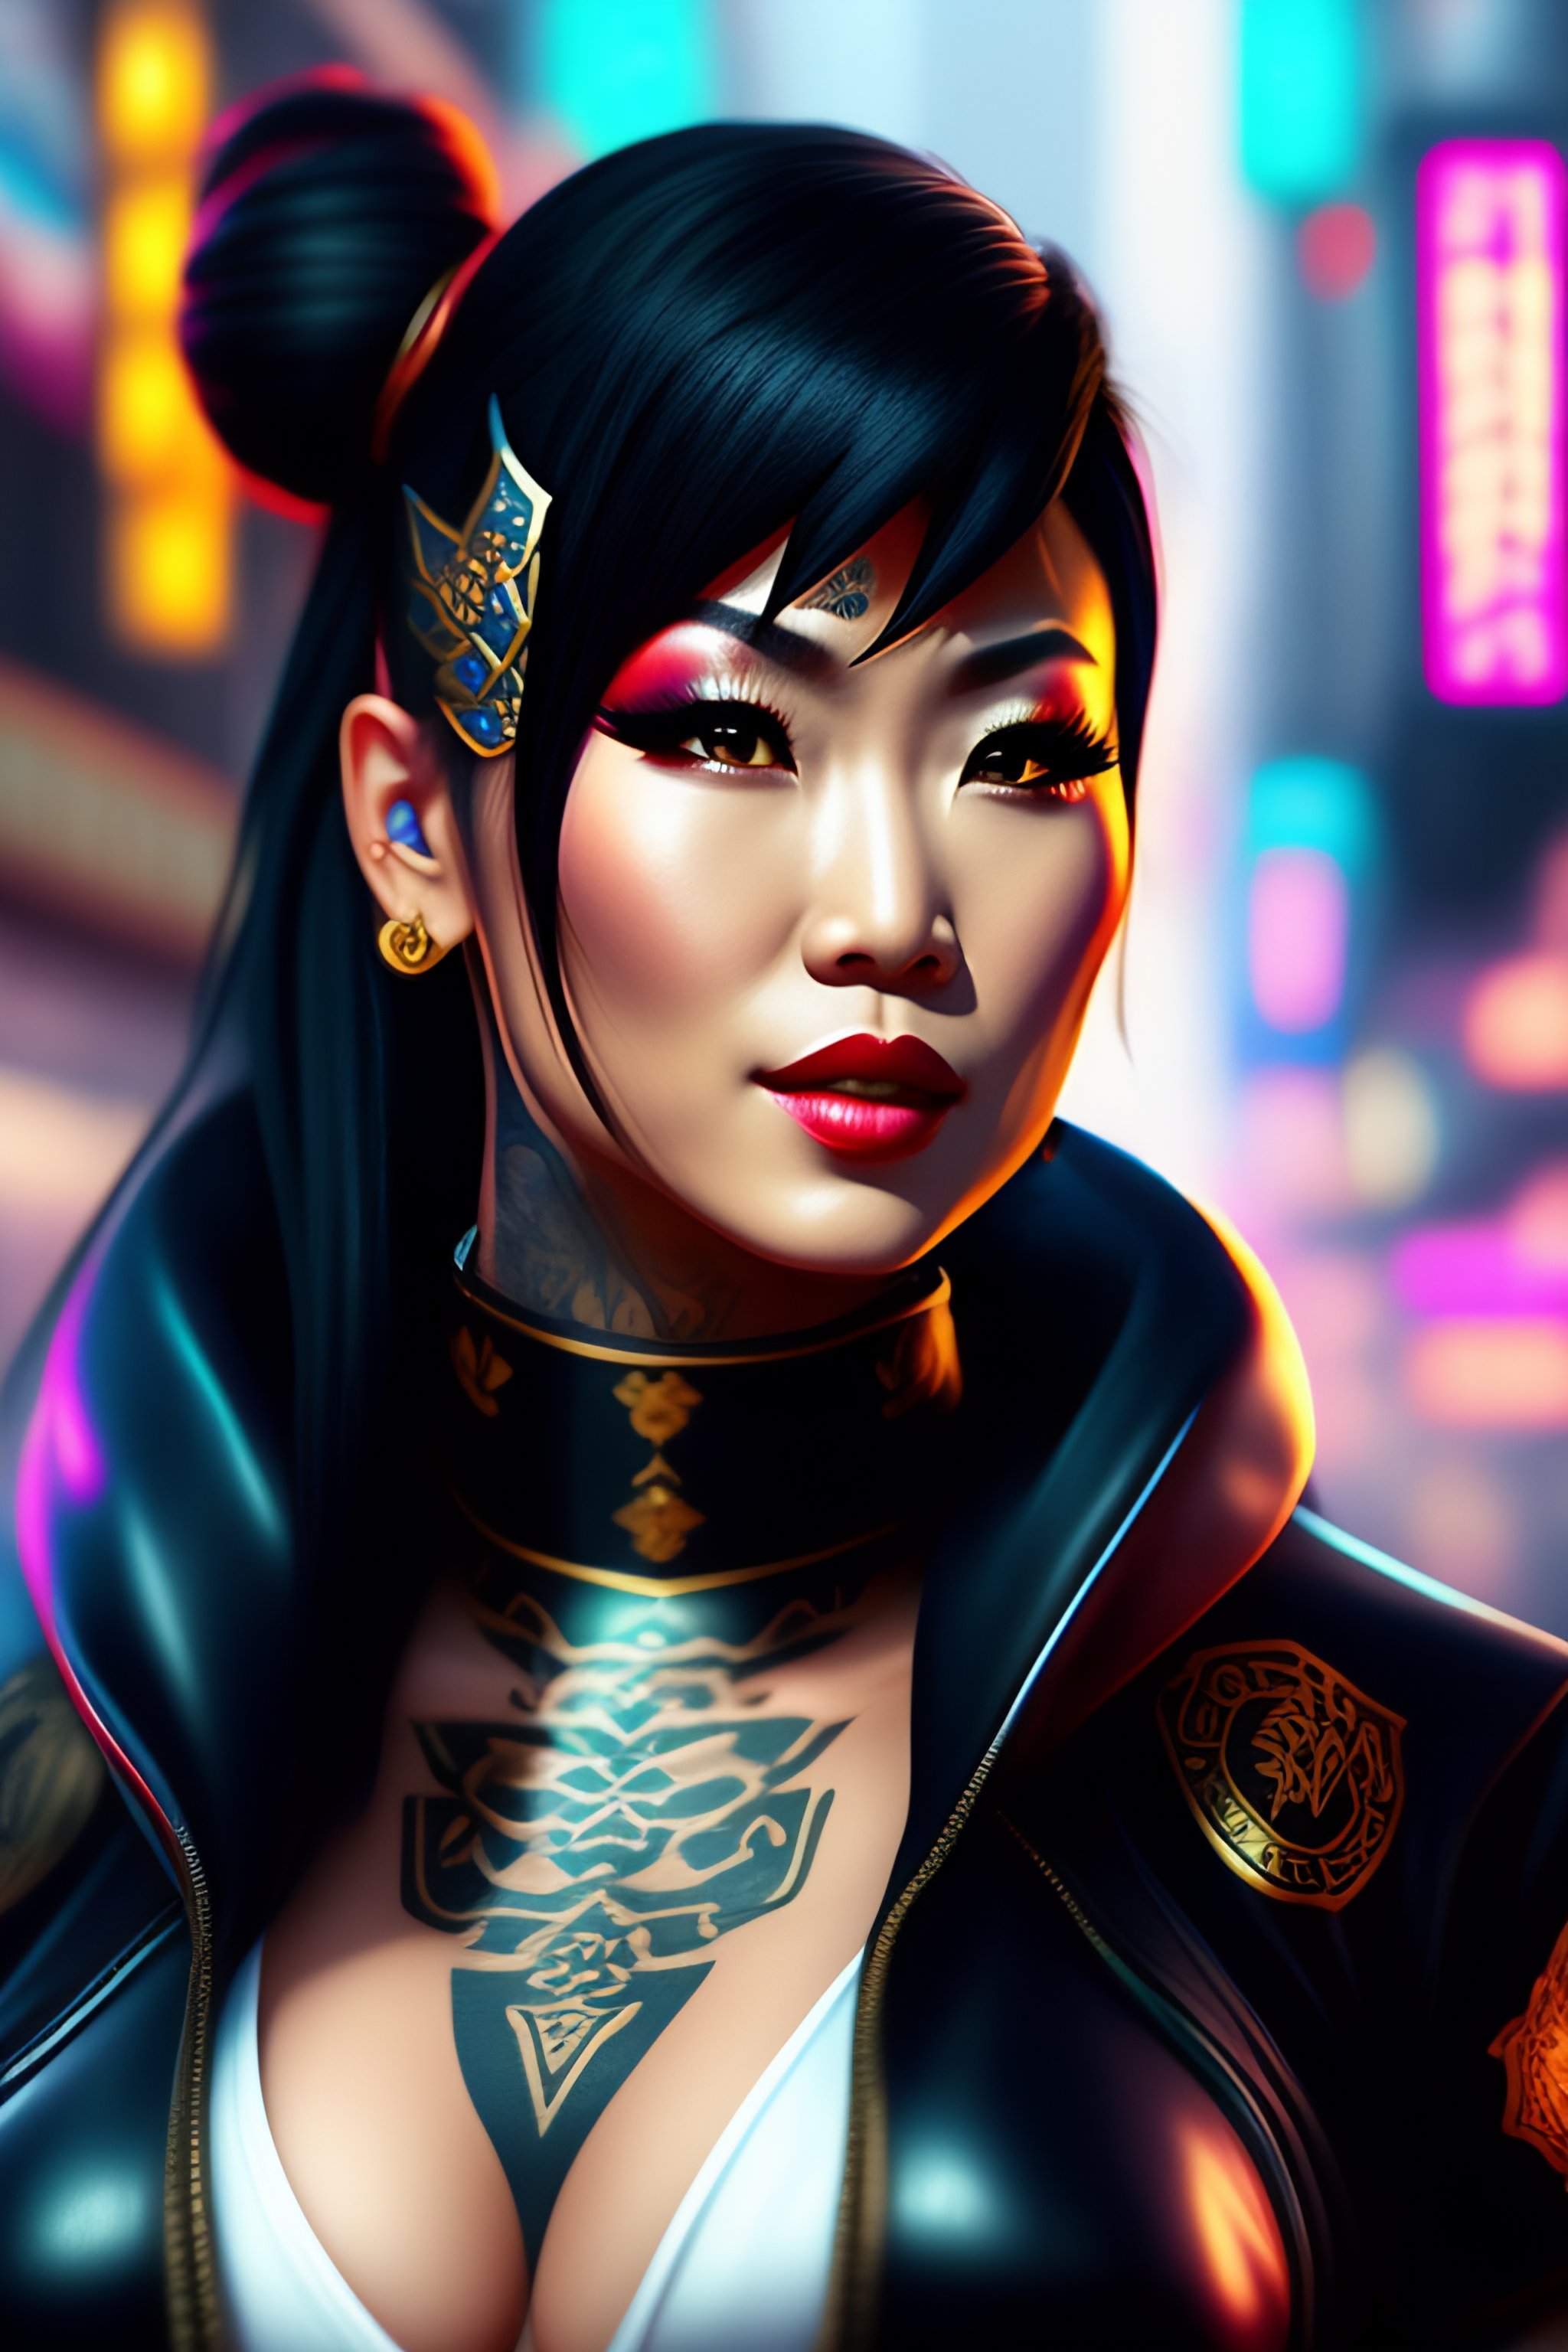 Lexica - Cute Chun Li with yakuza tattoos in a cyberpunk-style city